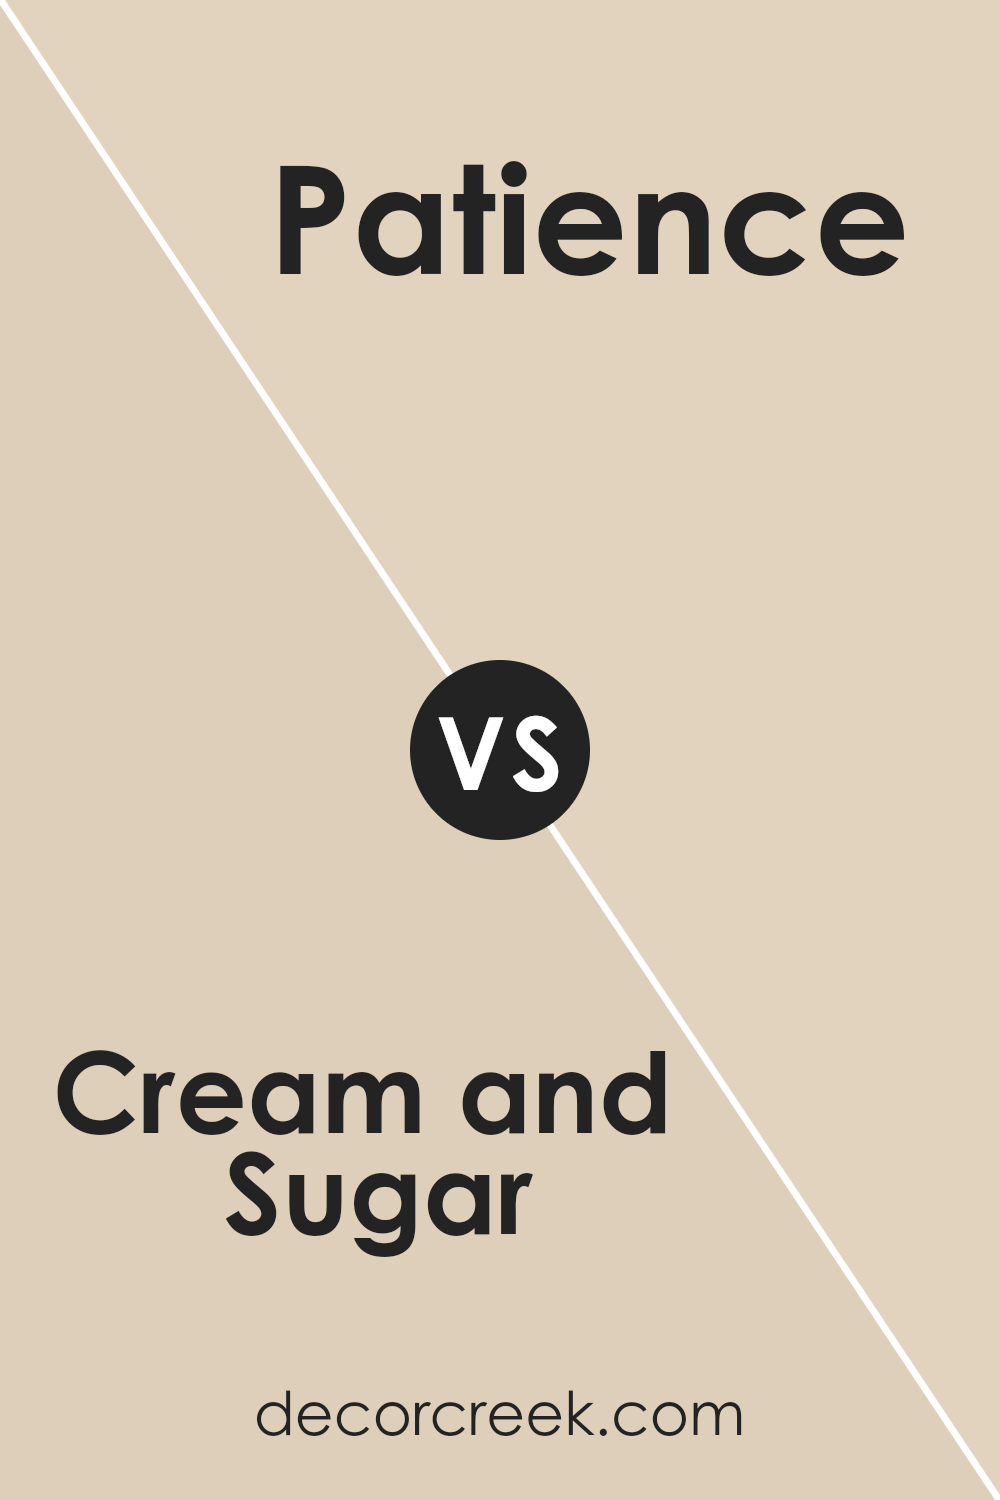 cream_and_sugar_sw_9507_vs_patience_sw_7555